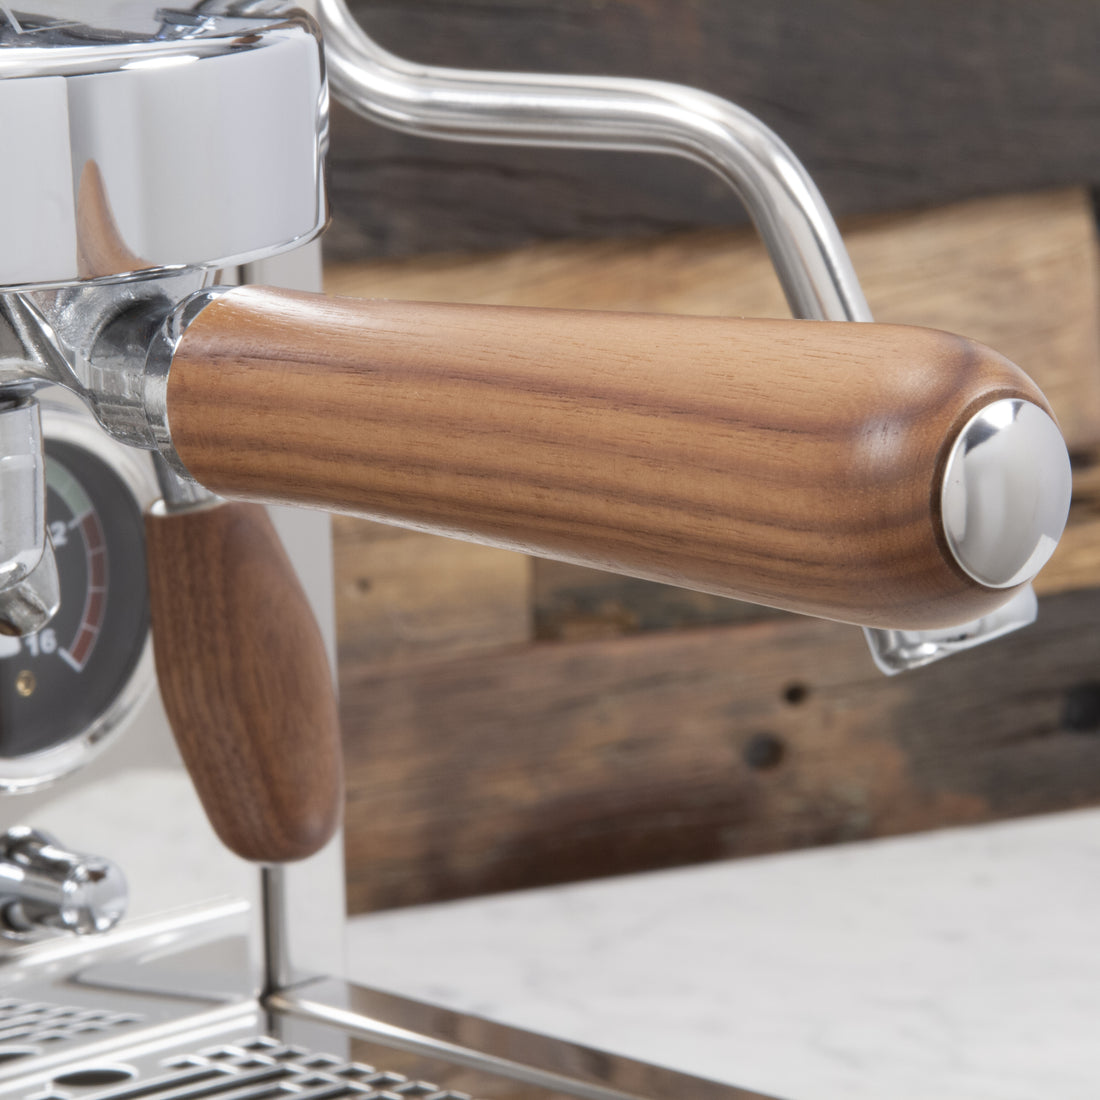 Quick Mill Arnos Espresso Machine With Flow Control - Walnut Accents